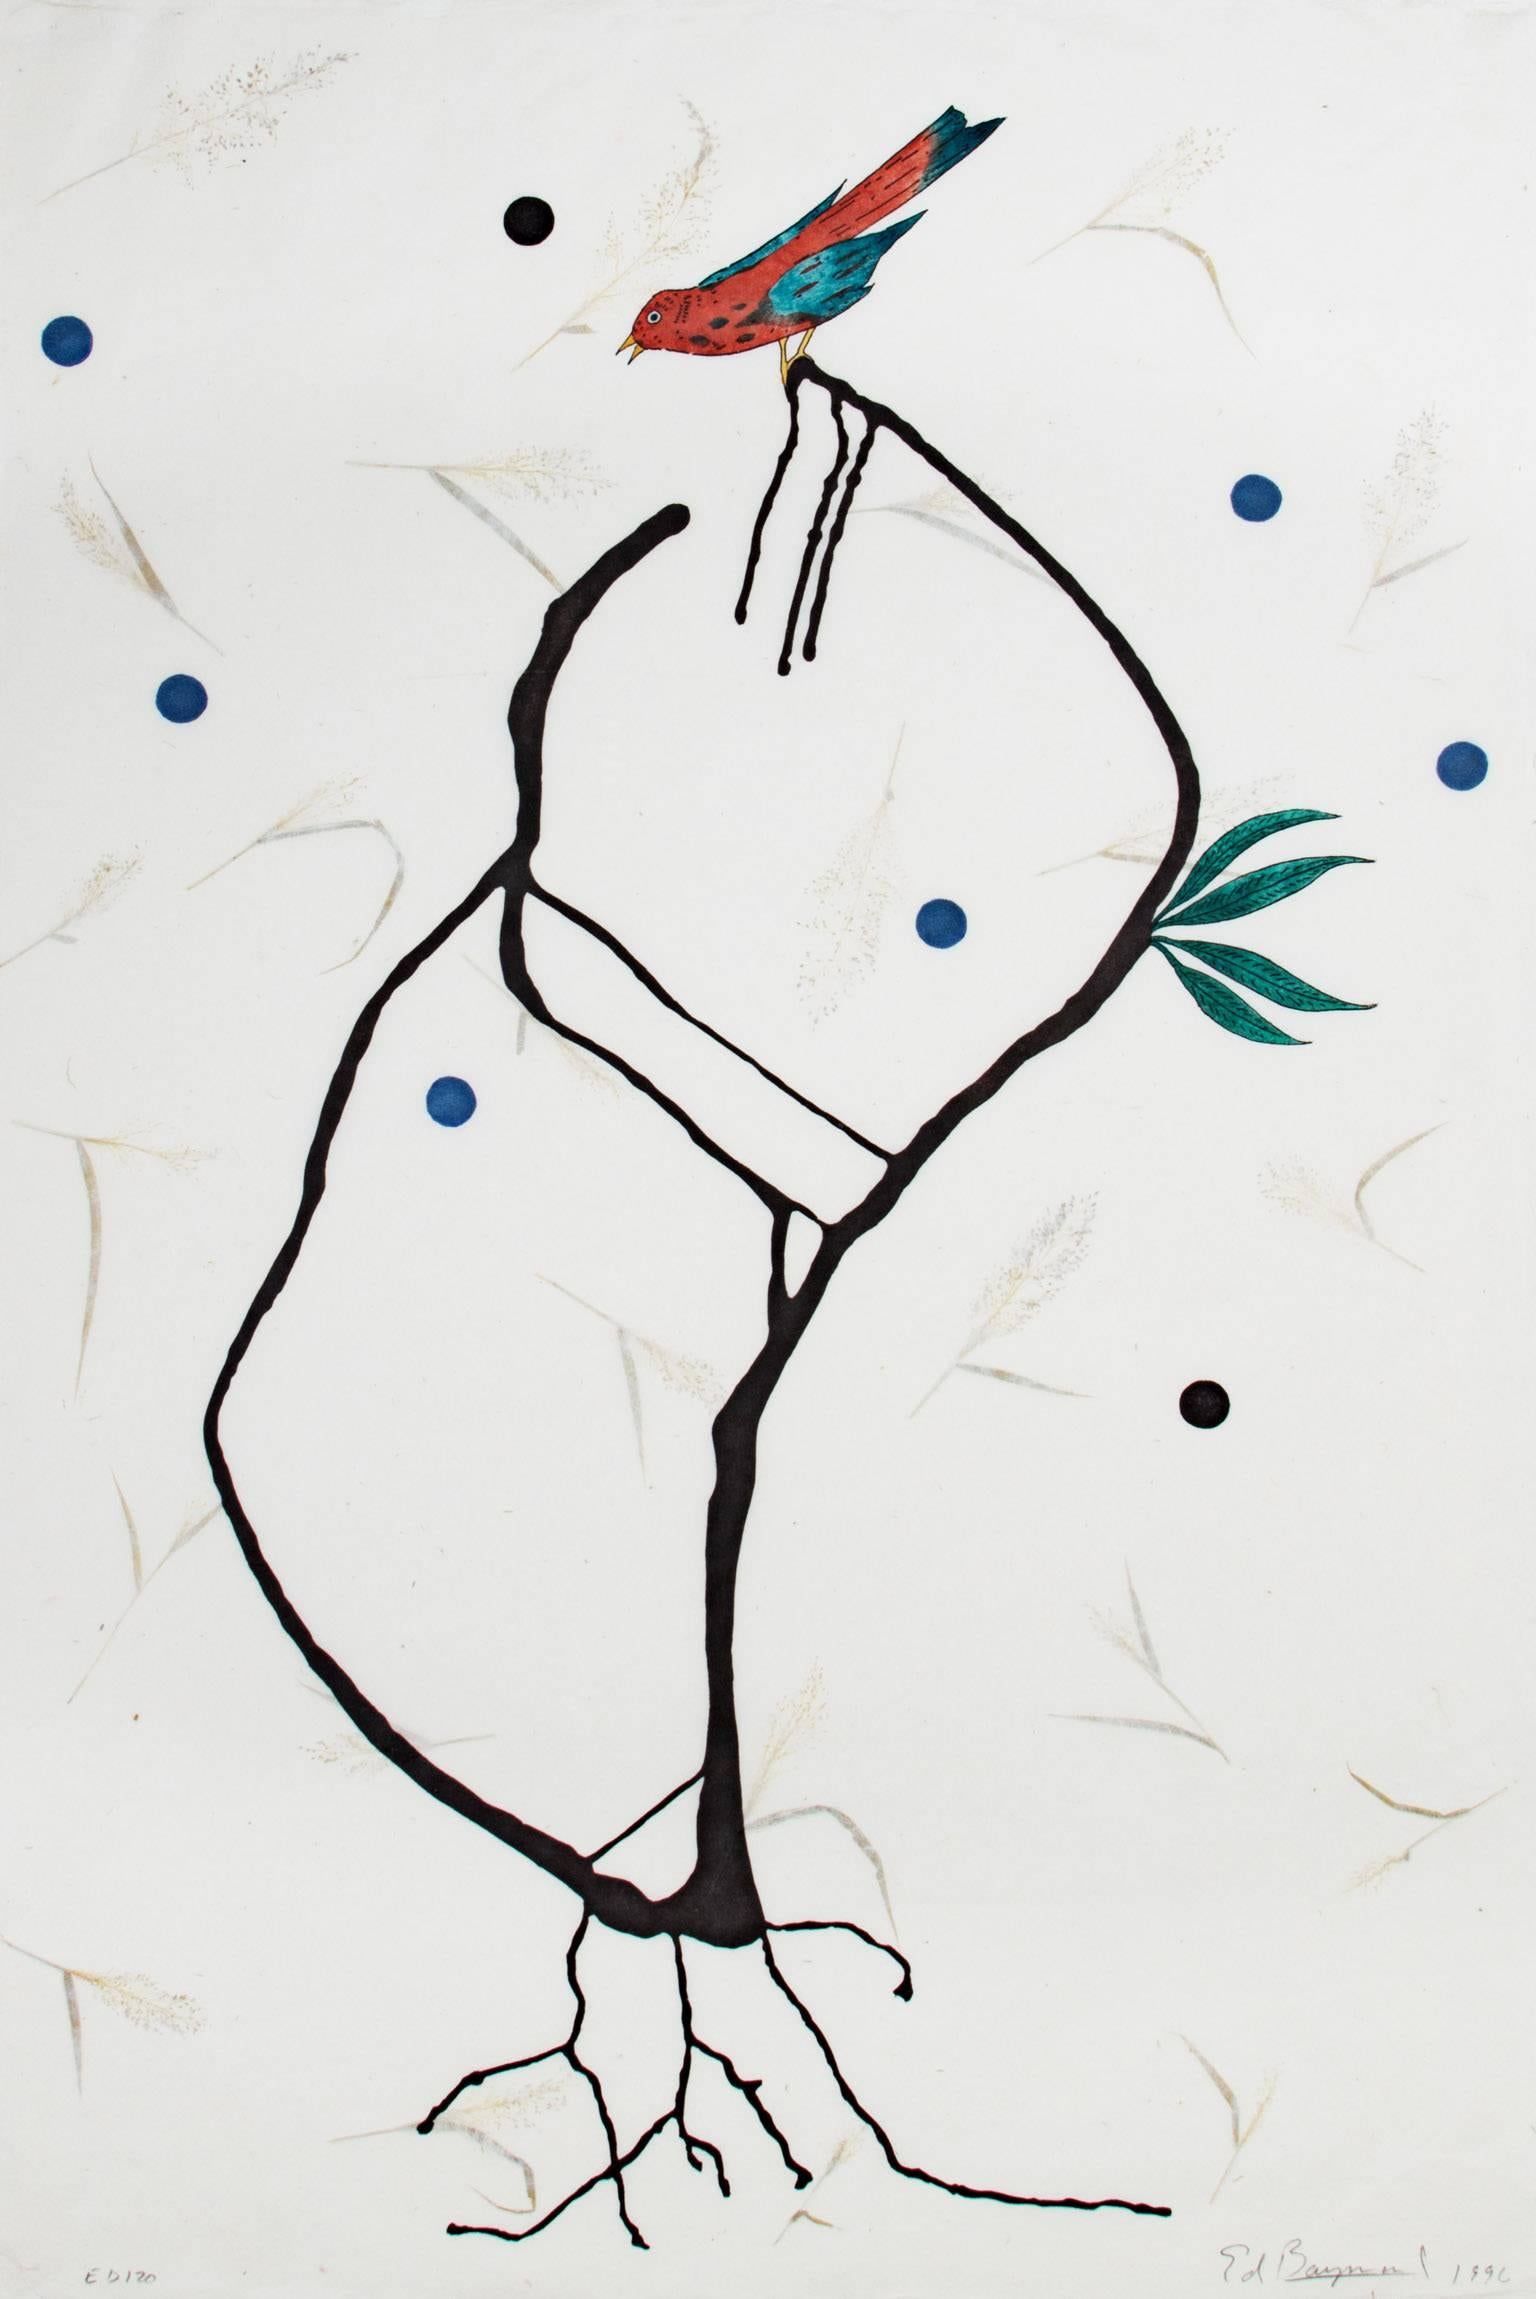 Ed Baynard Animal Print - "The Little Bird & The Leaves of Grass" minimalism mixed media signed nature